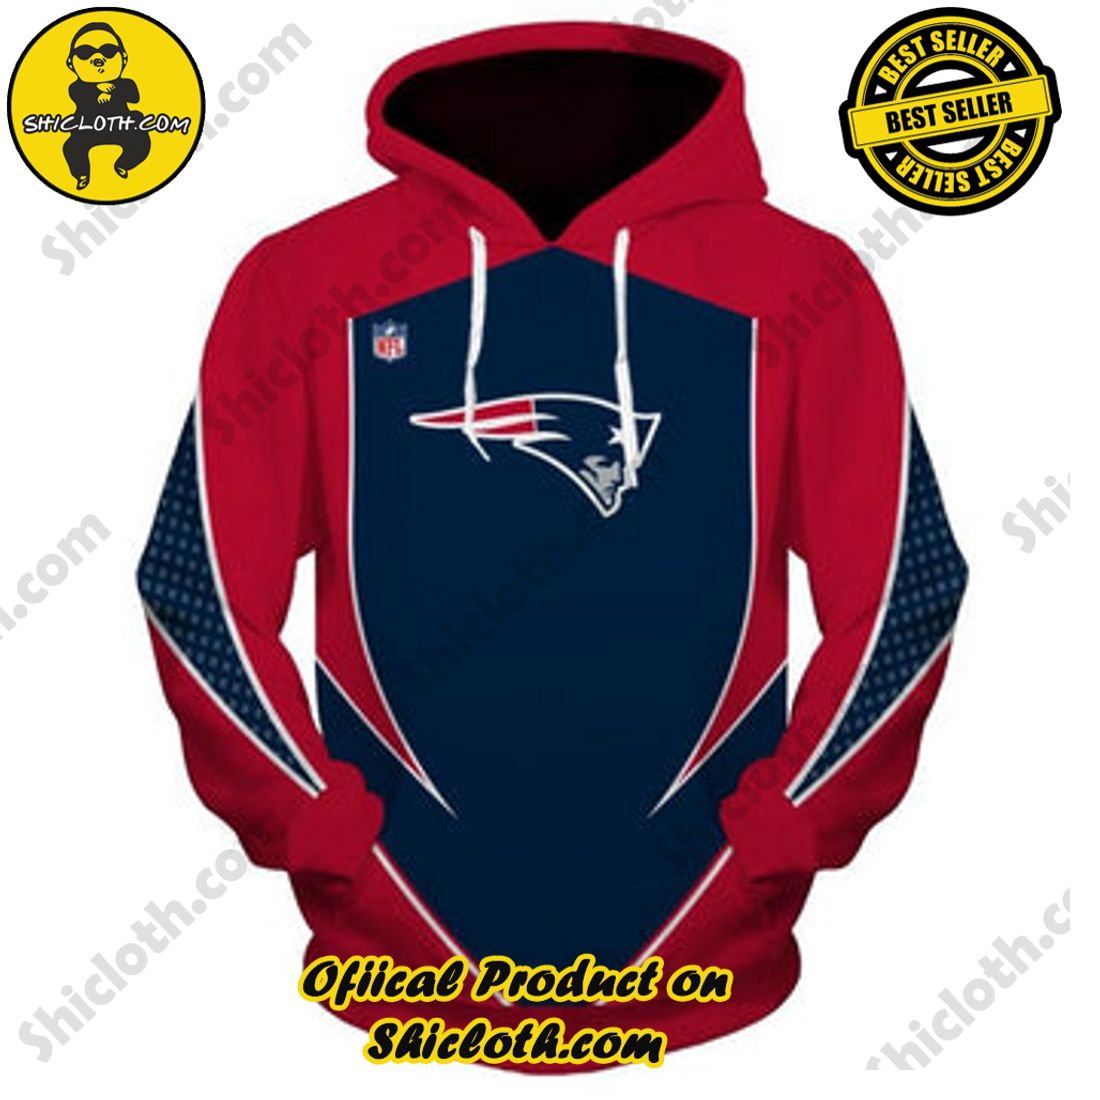 3D Colorado Avalanche Custom Name Number Hockey Jersey - Owl Fashion Shop